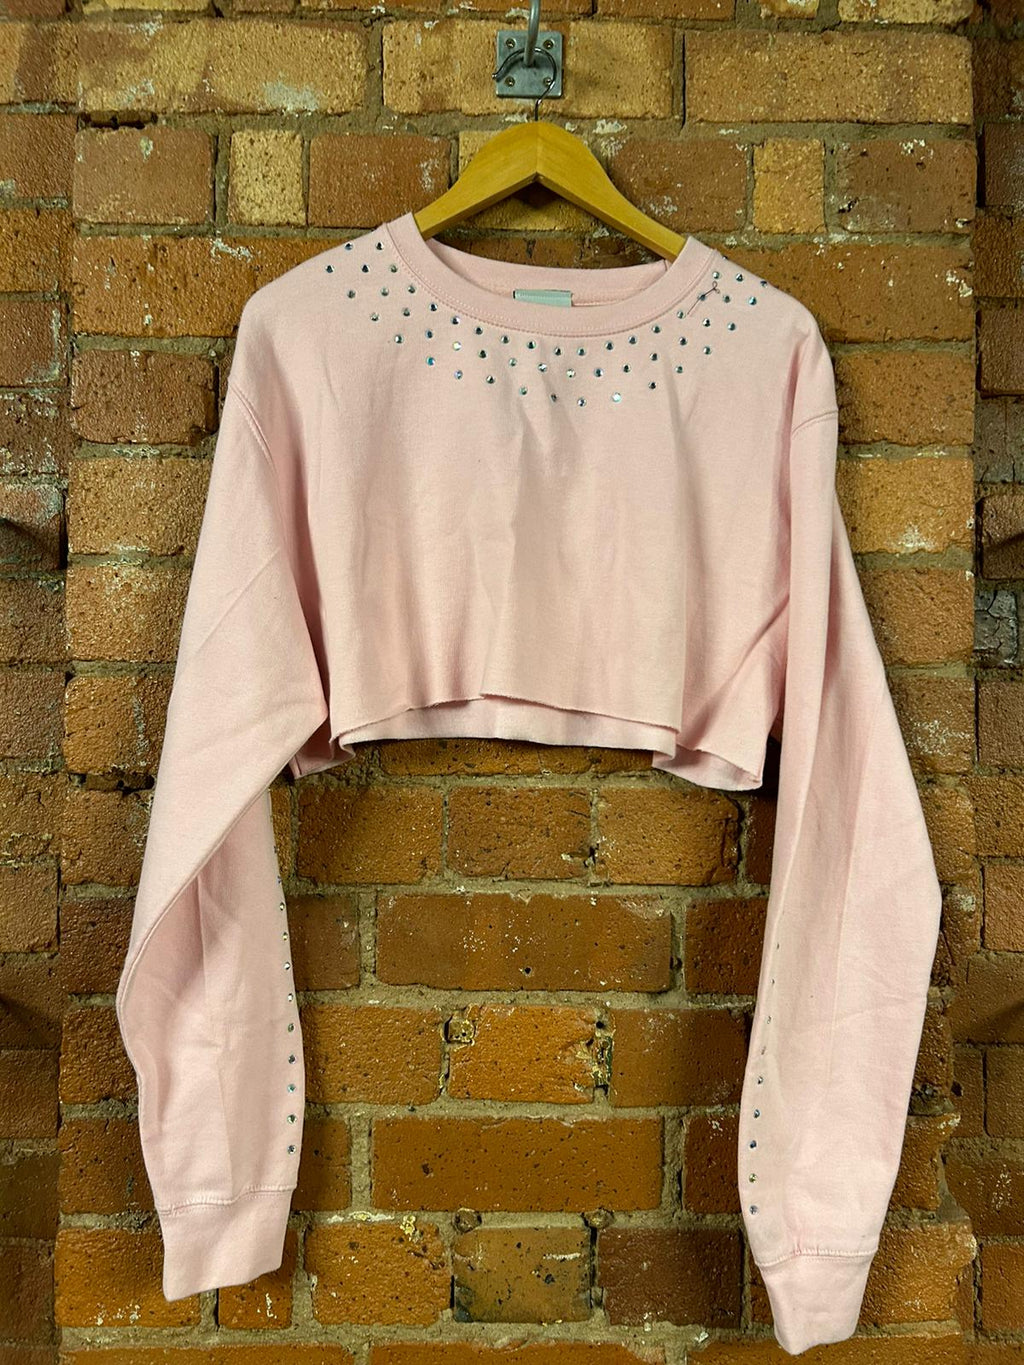 SALE Adult Large Baby Pink Jewel Neck & Sleeve Cropped Sweatshirt